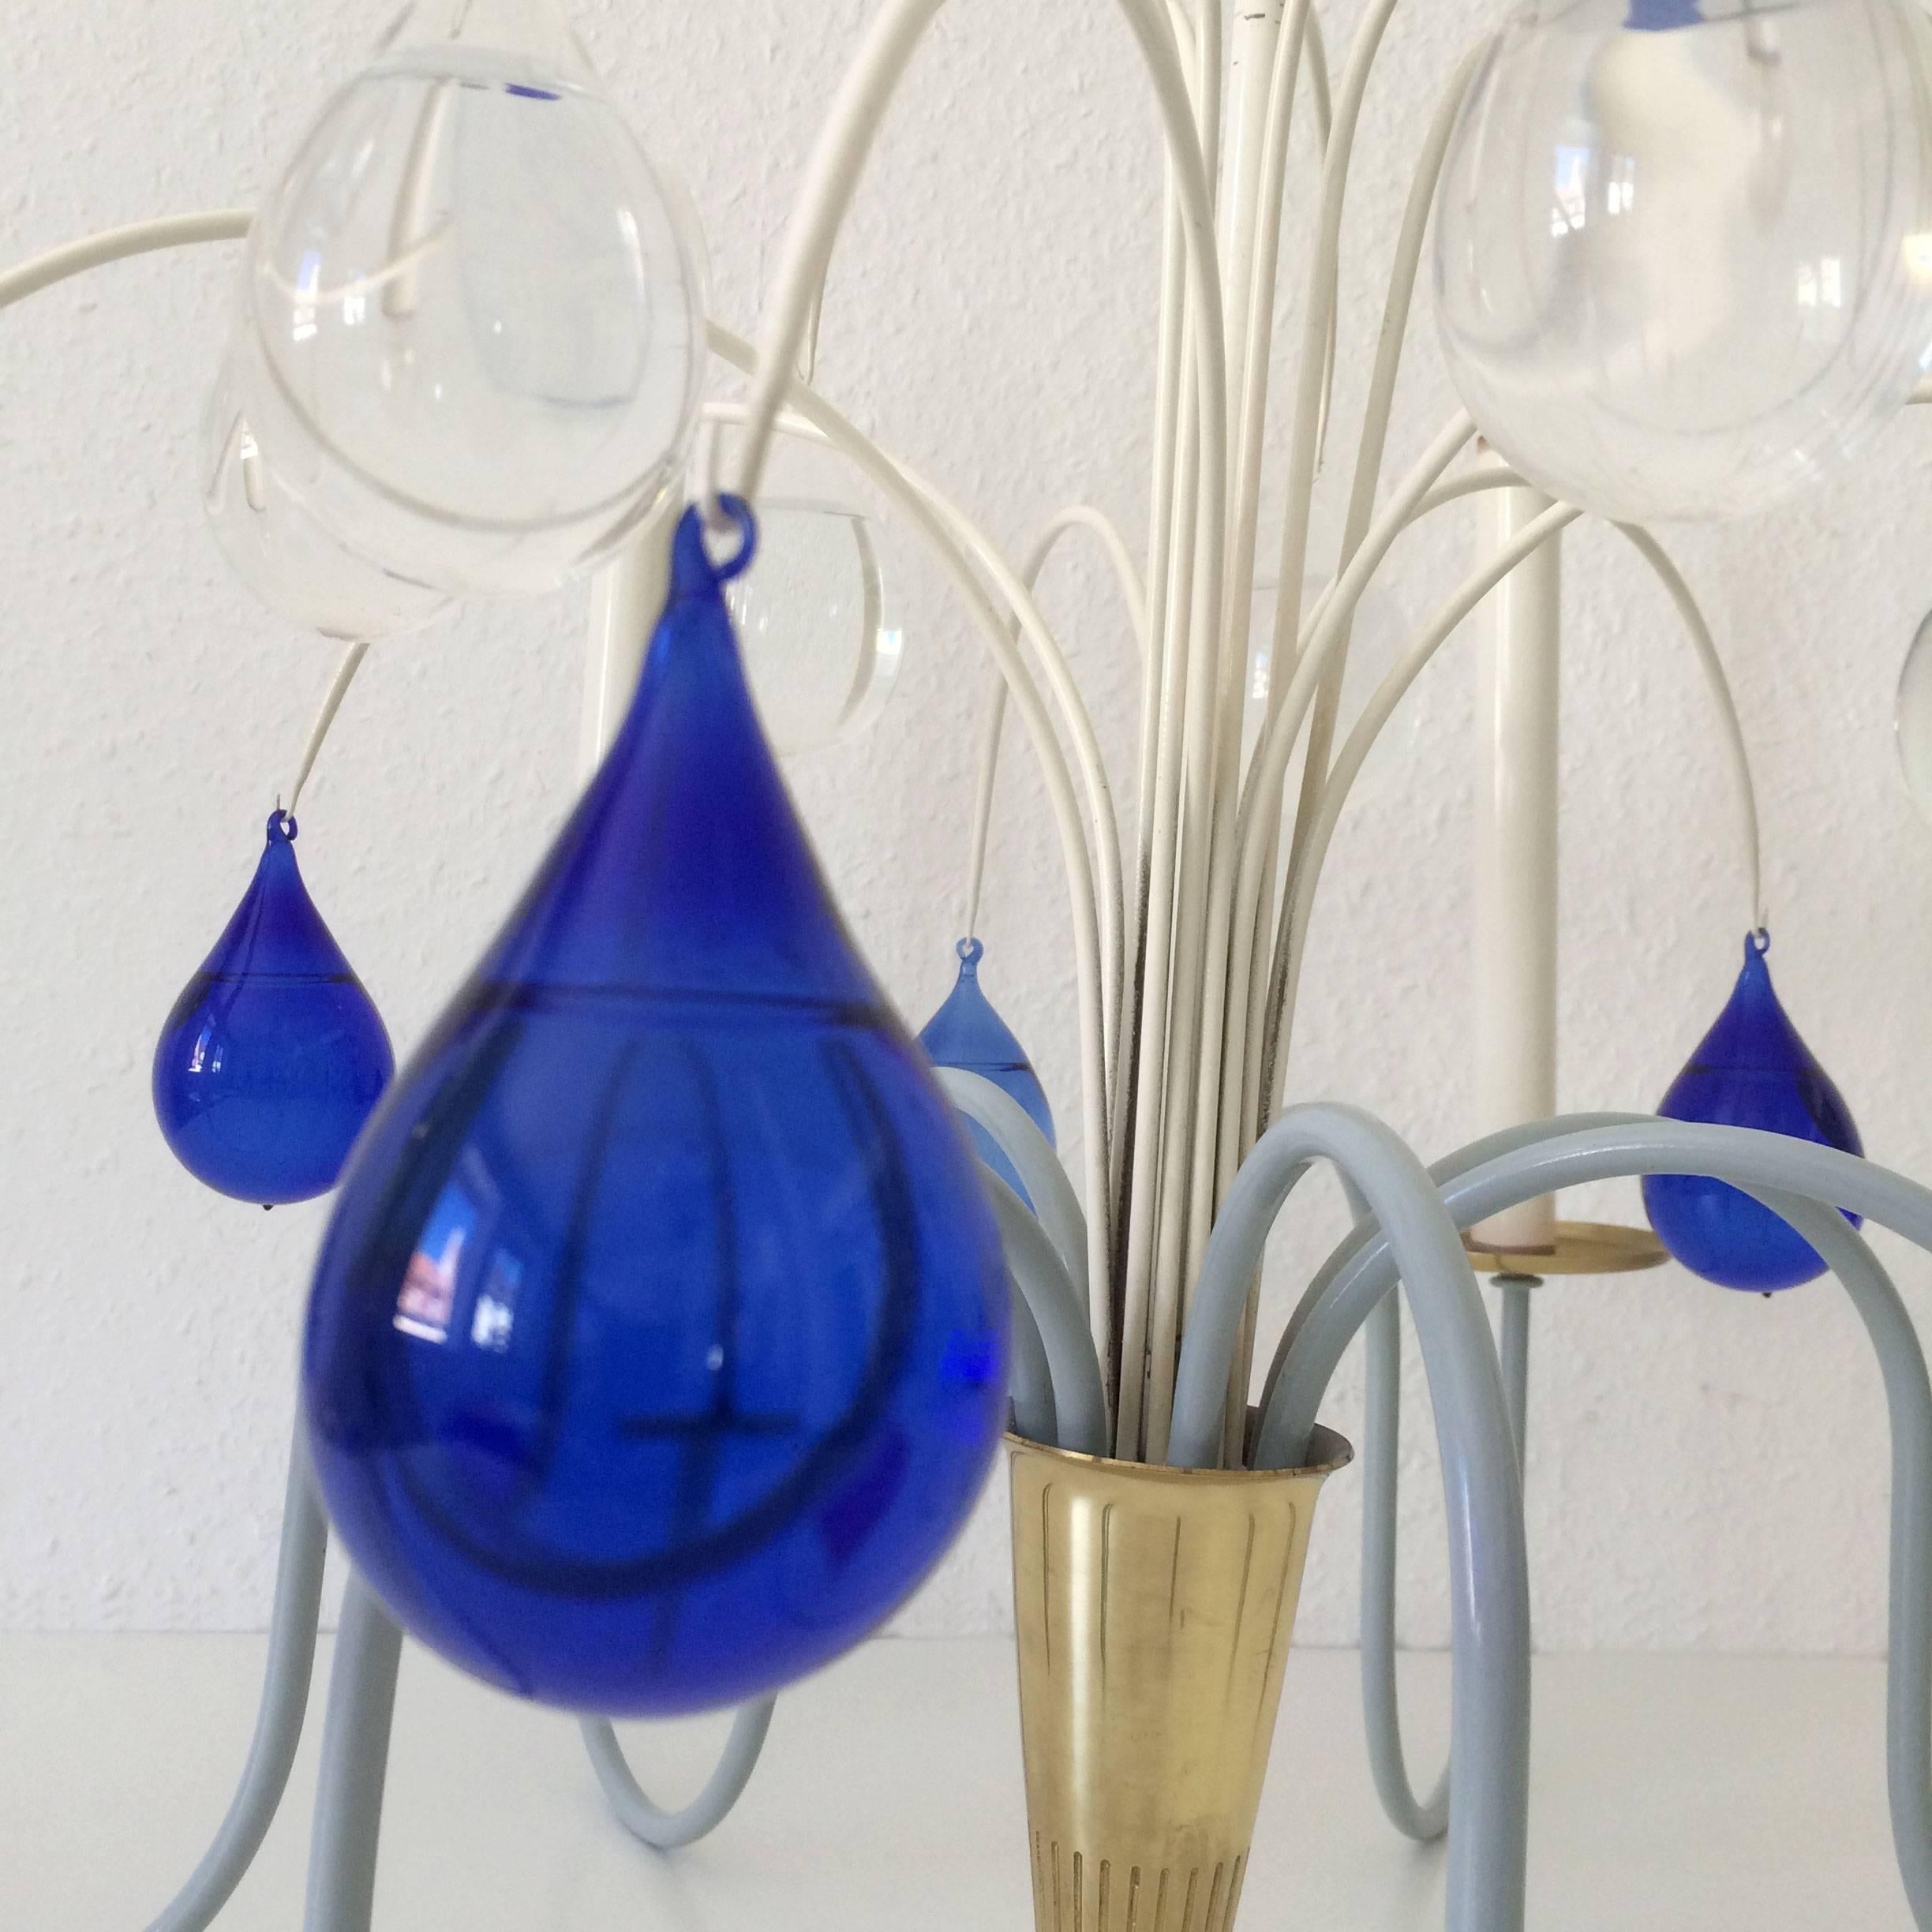 Blown Glass Seven-Armed Chandelier or Pendant Lamp by Vereinigte Werkstätten Germany 1950s For Sale